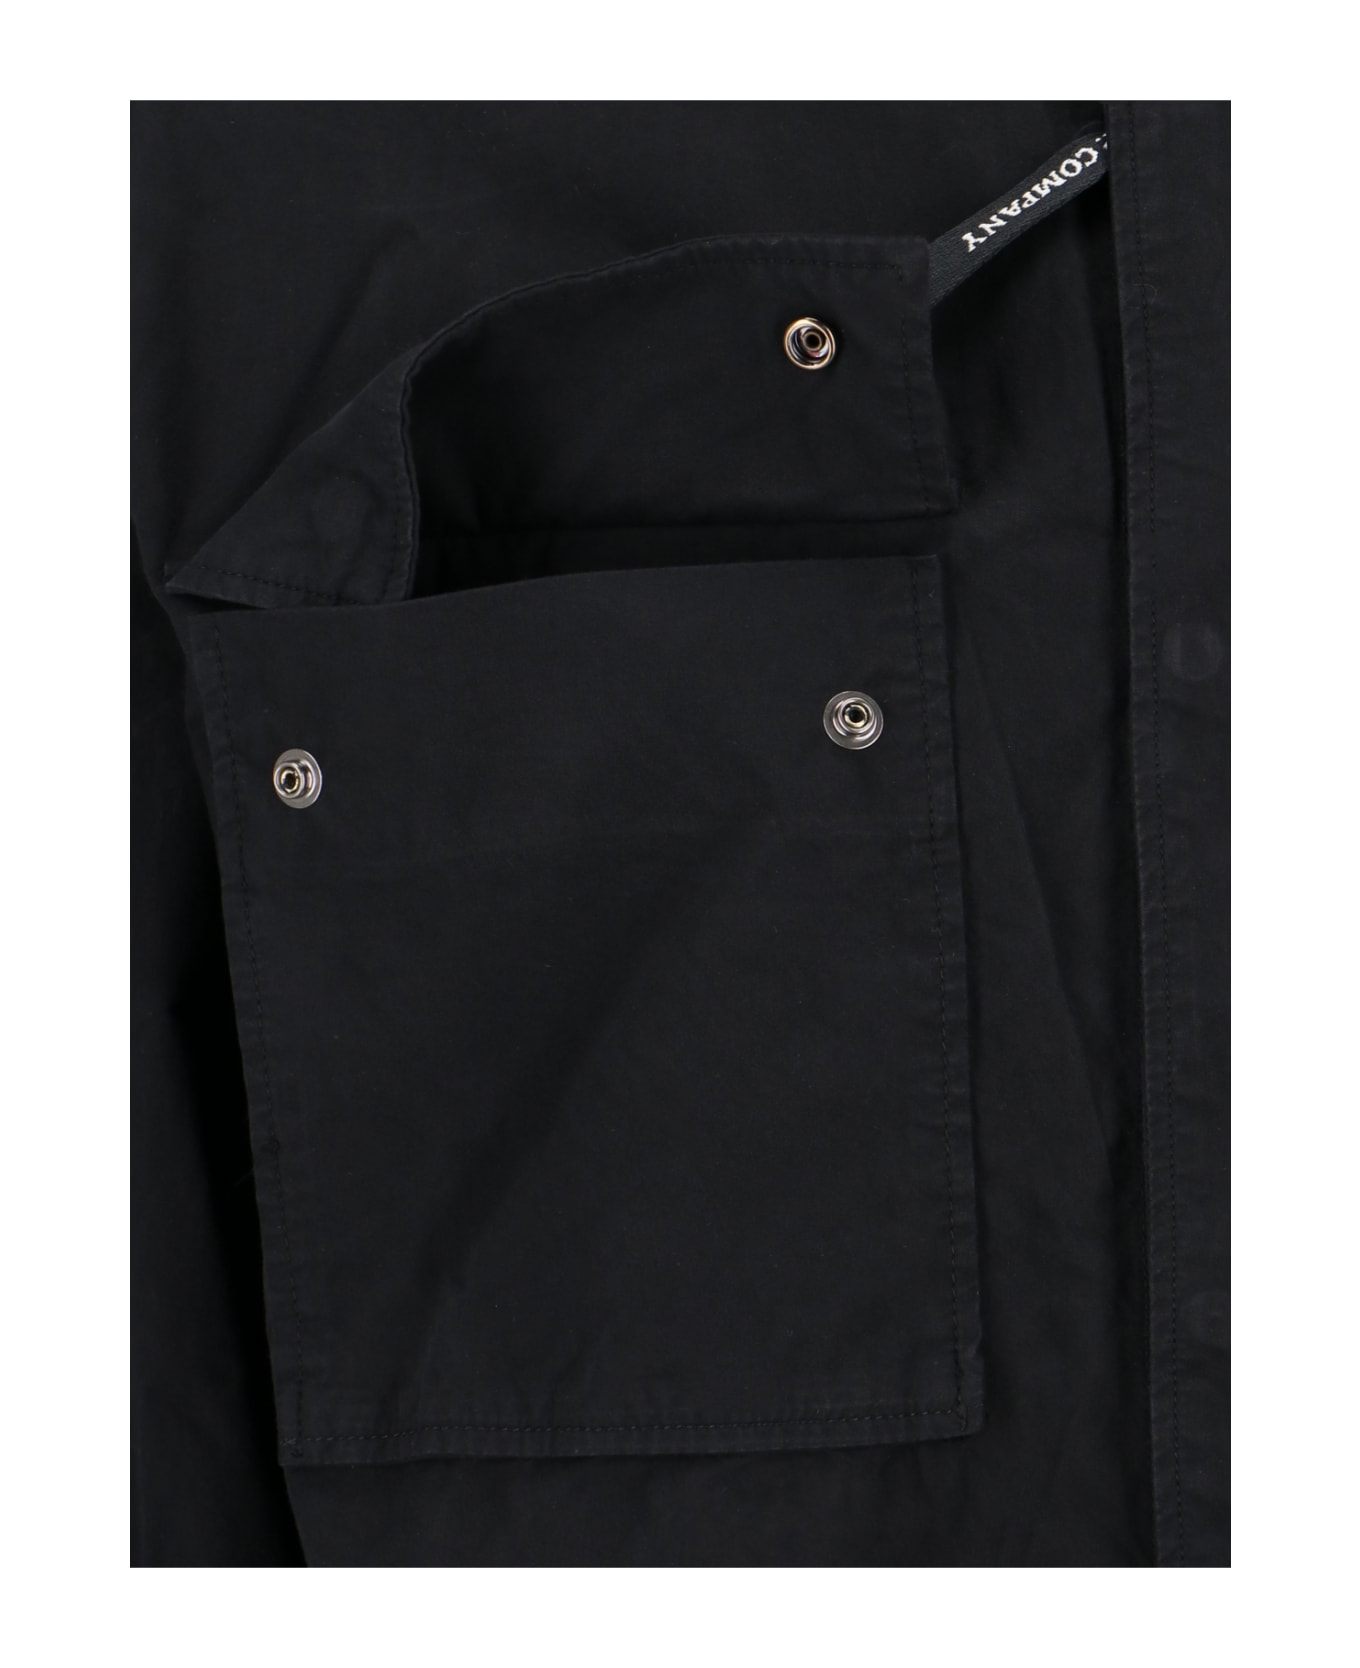 C.P. Company 'lens' Shirt Jacket - Black